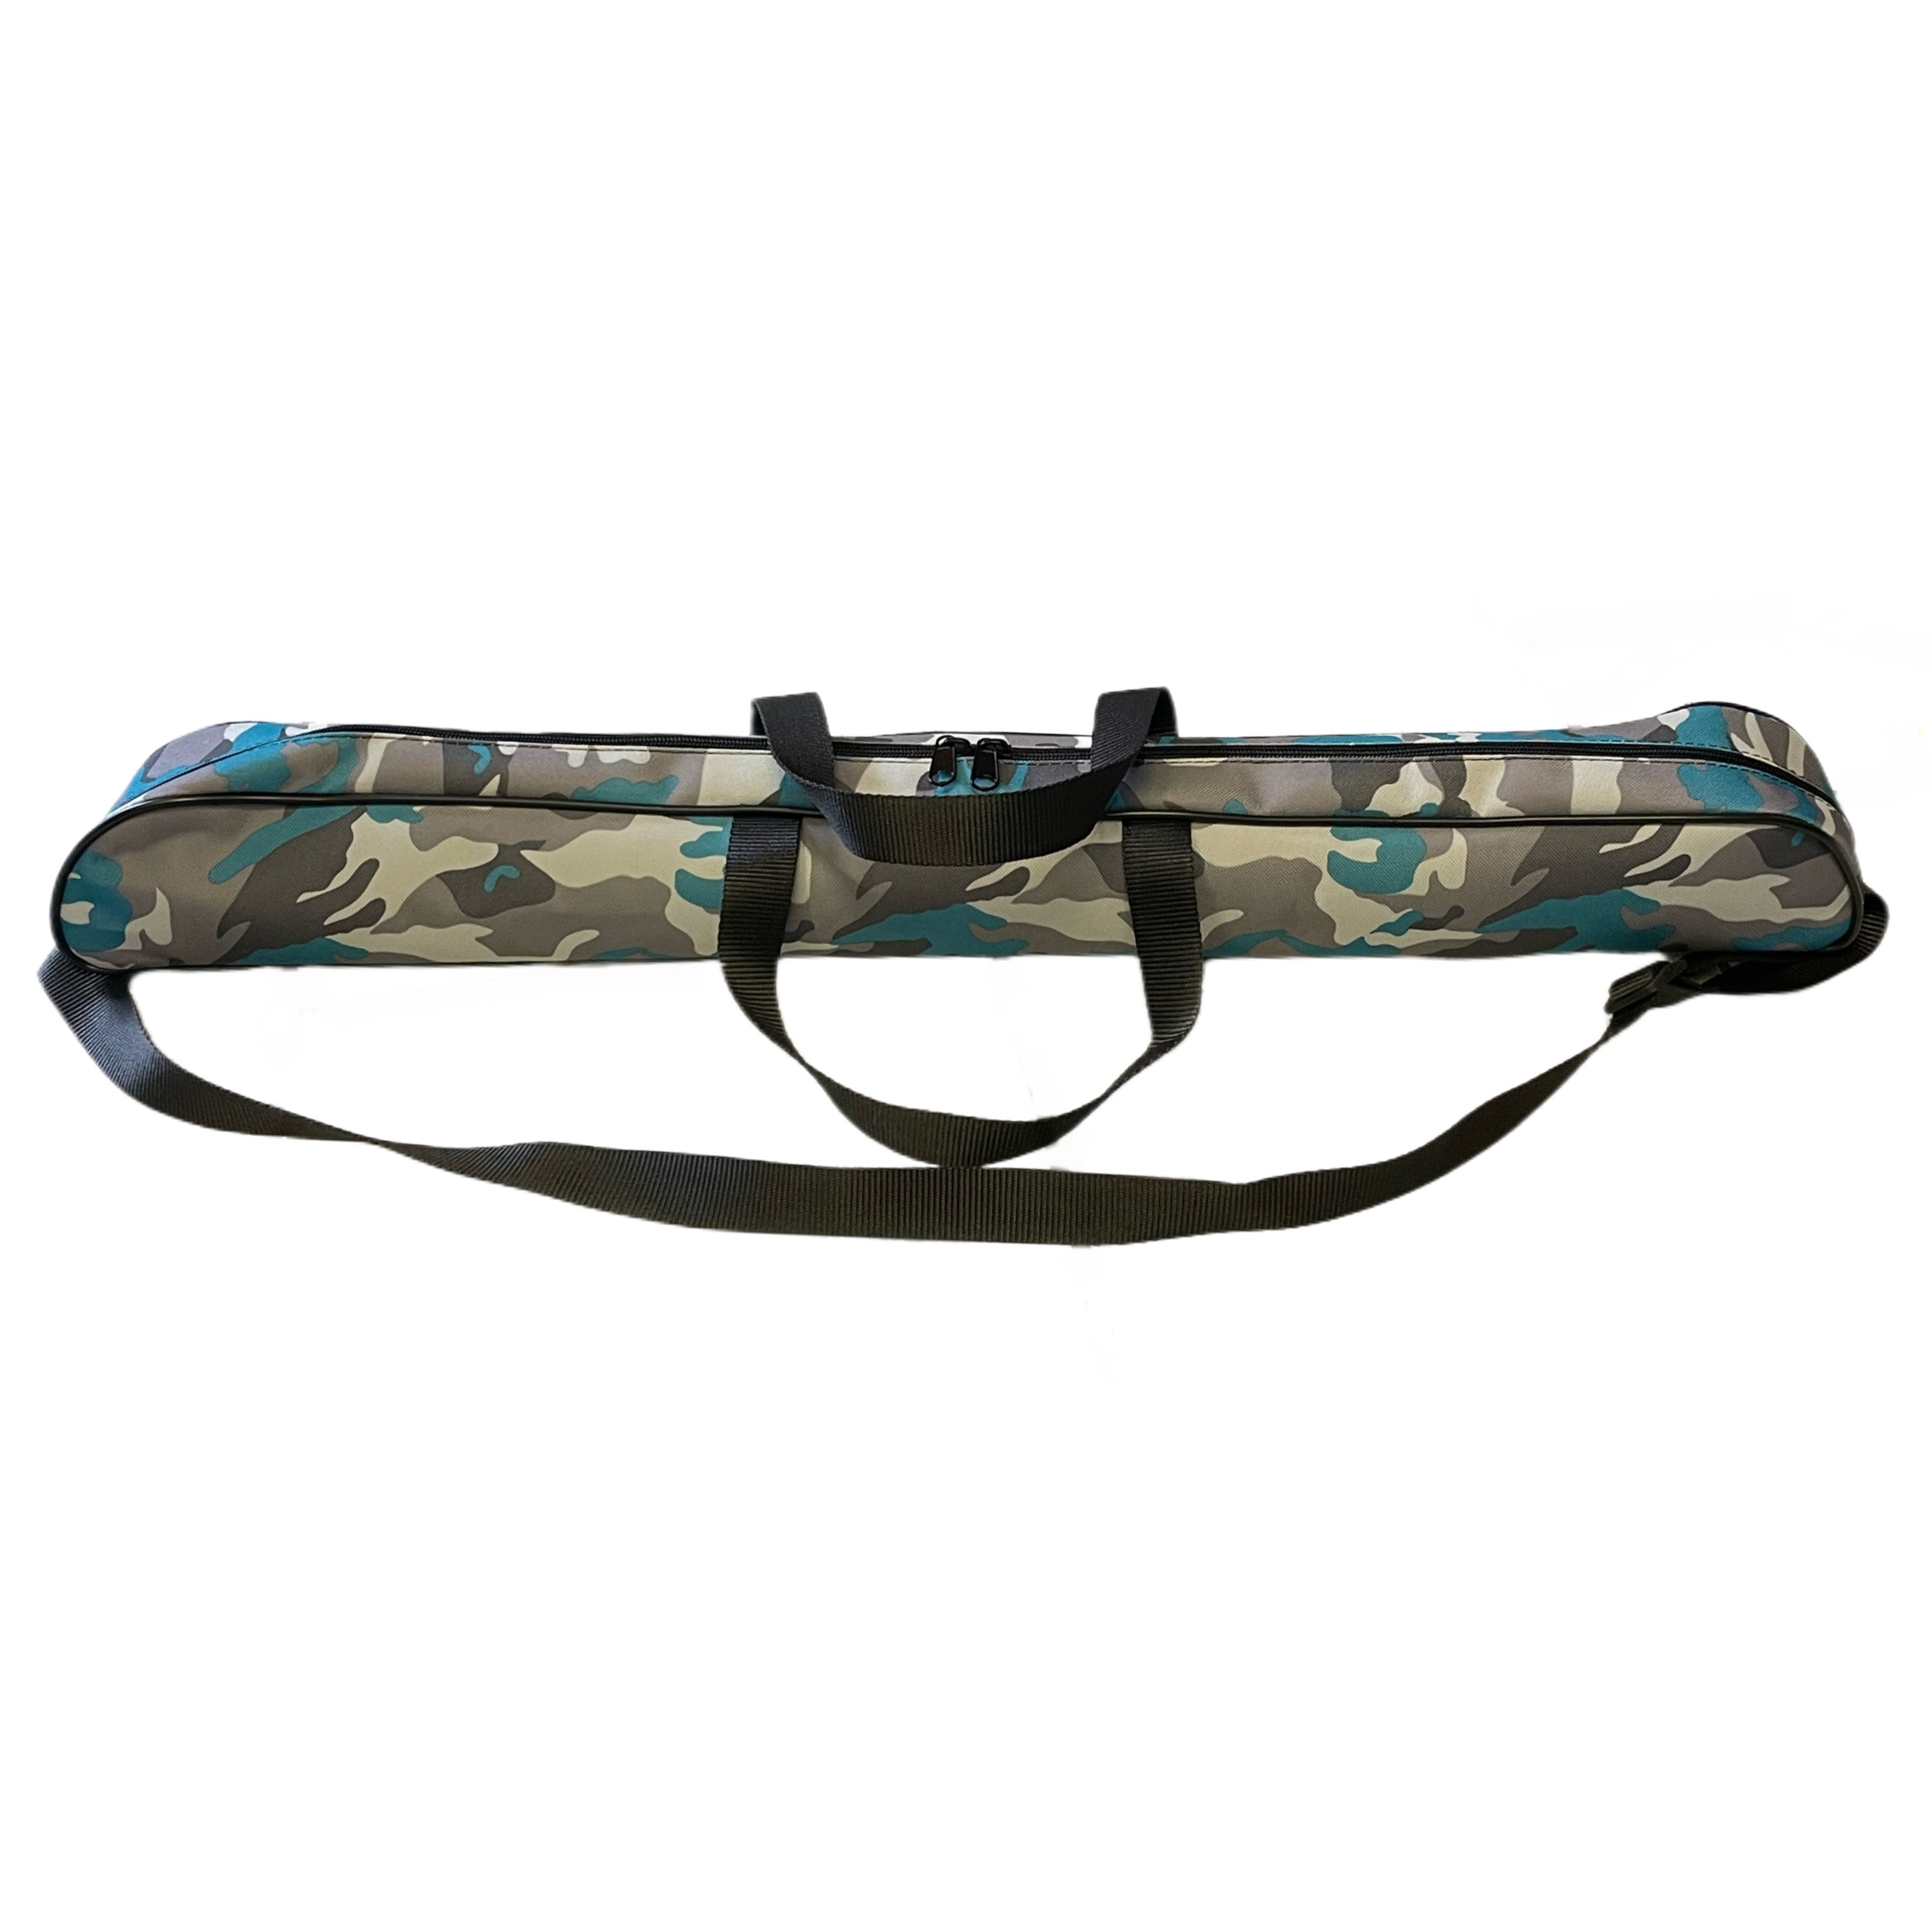 Baton Bag Medium - Camouflage Teal